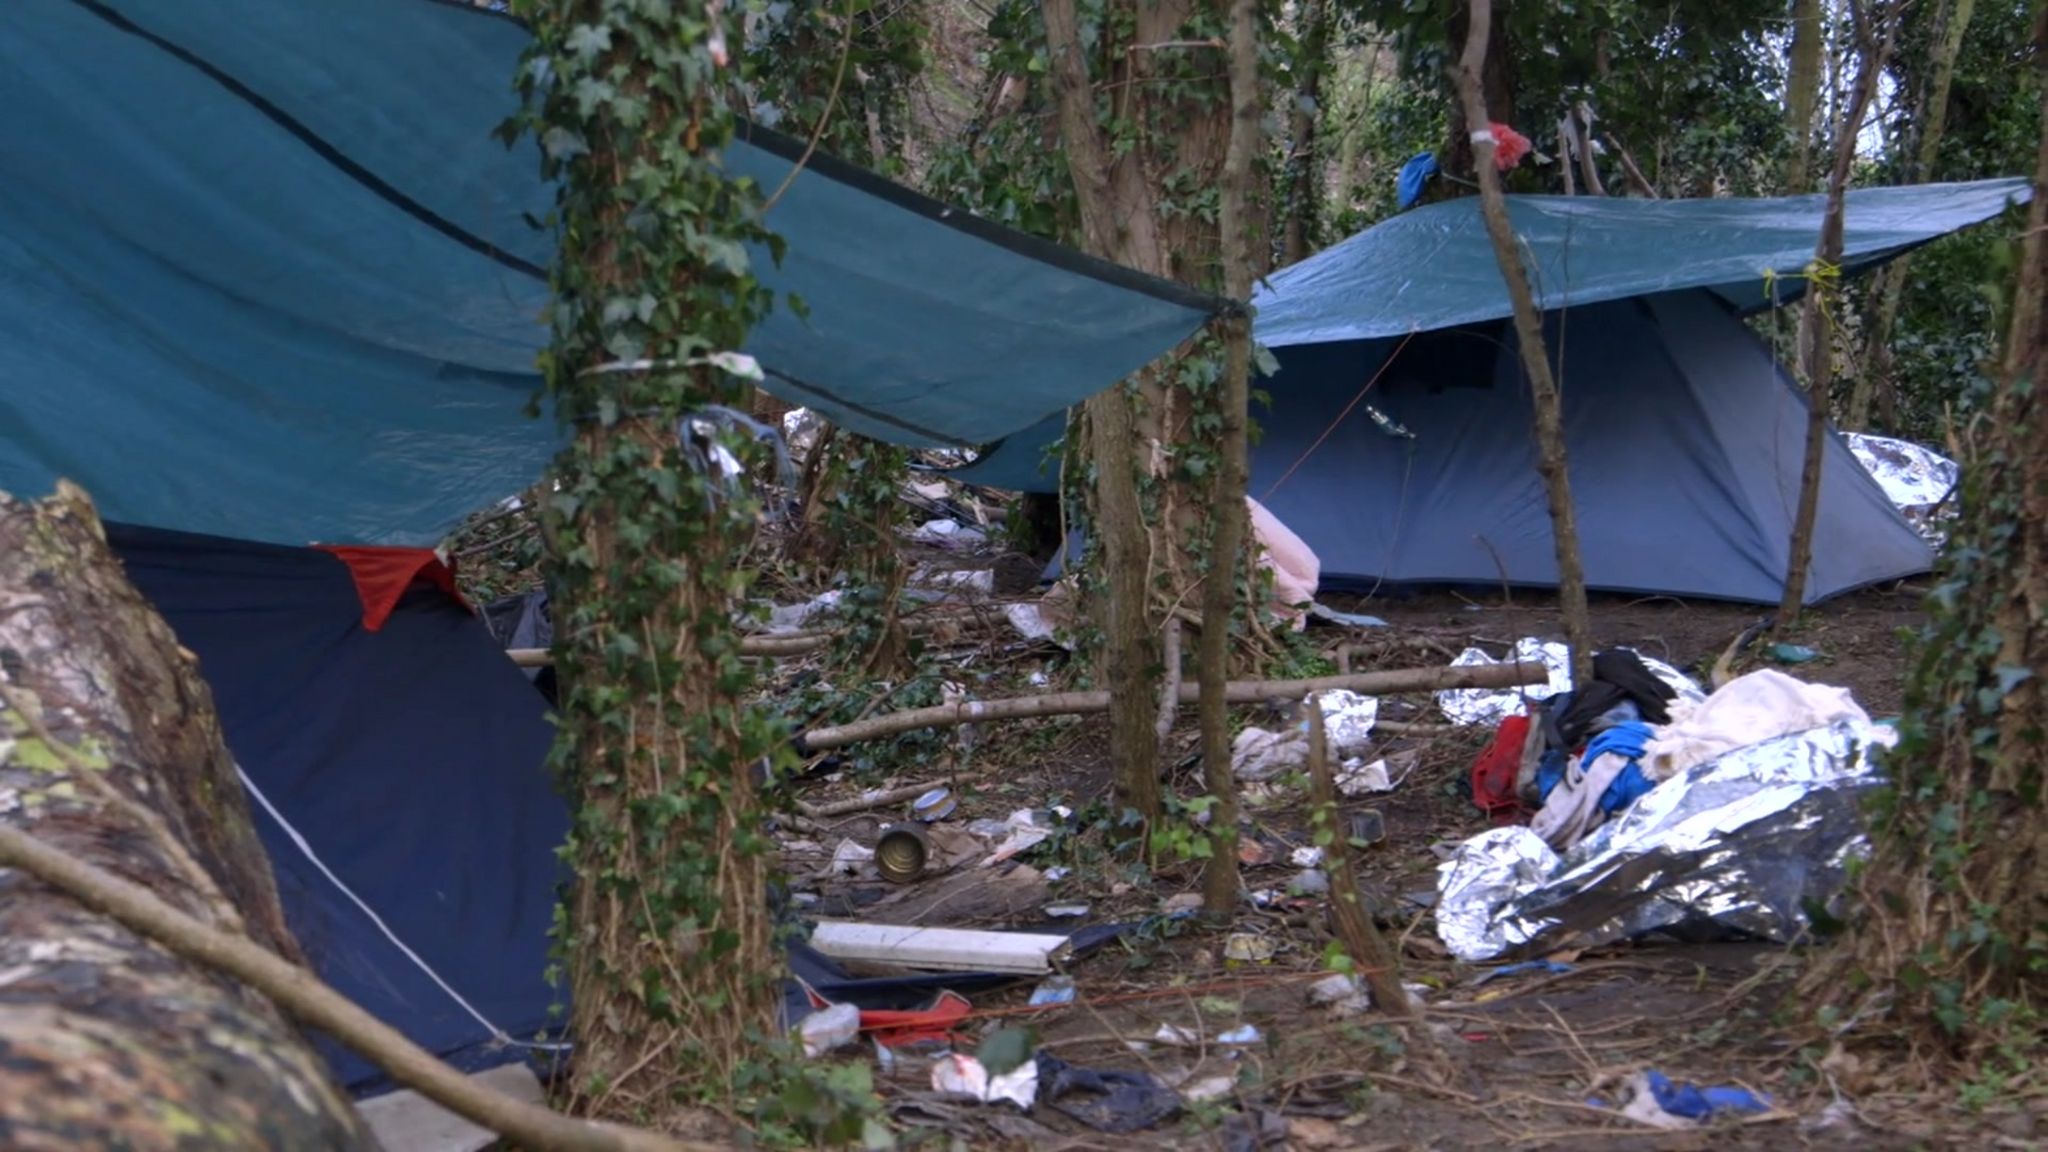 98% Of Tents Taken Home From Kendal Calling UK - Pollstar News